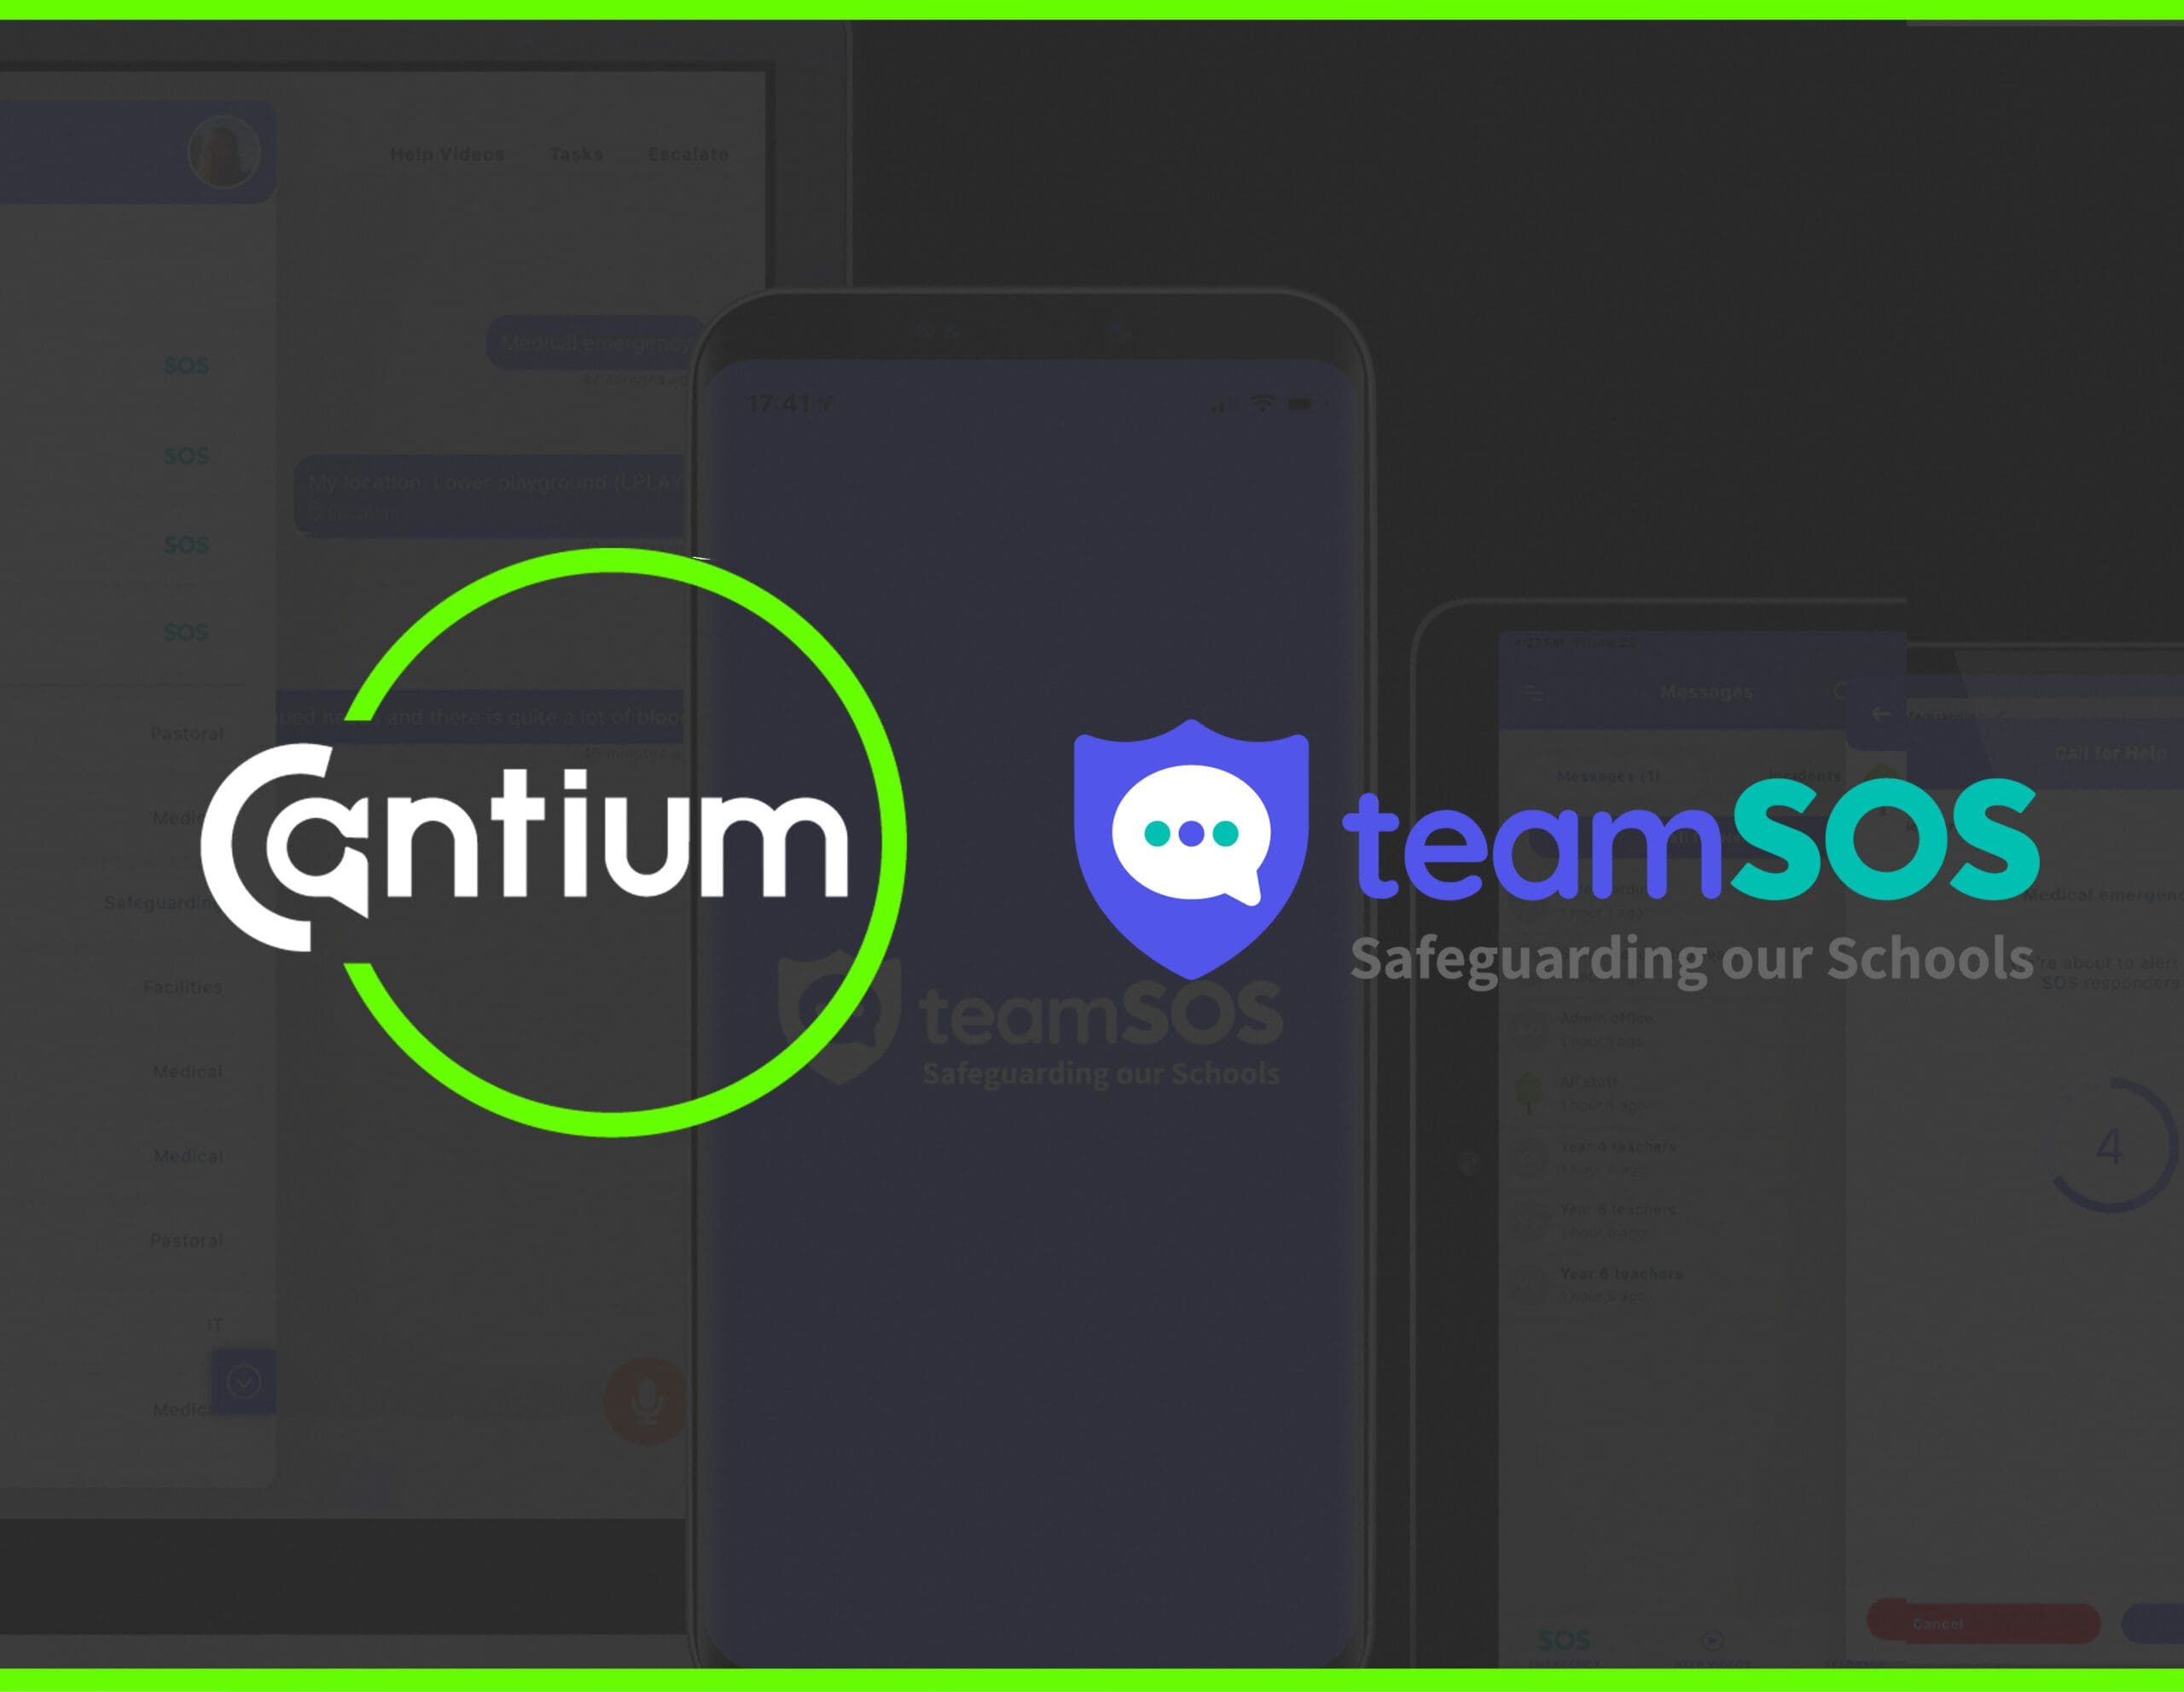 Cantium and teamSOS partnership image